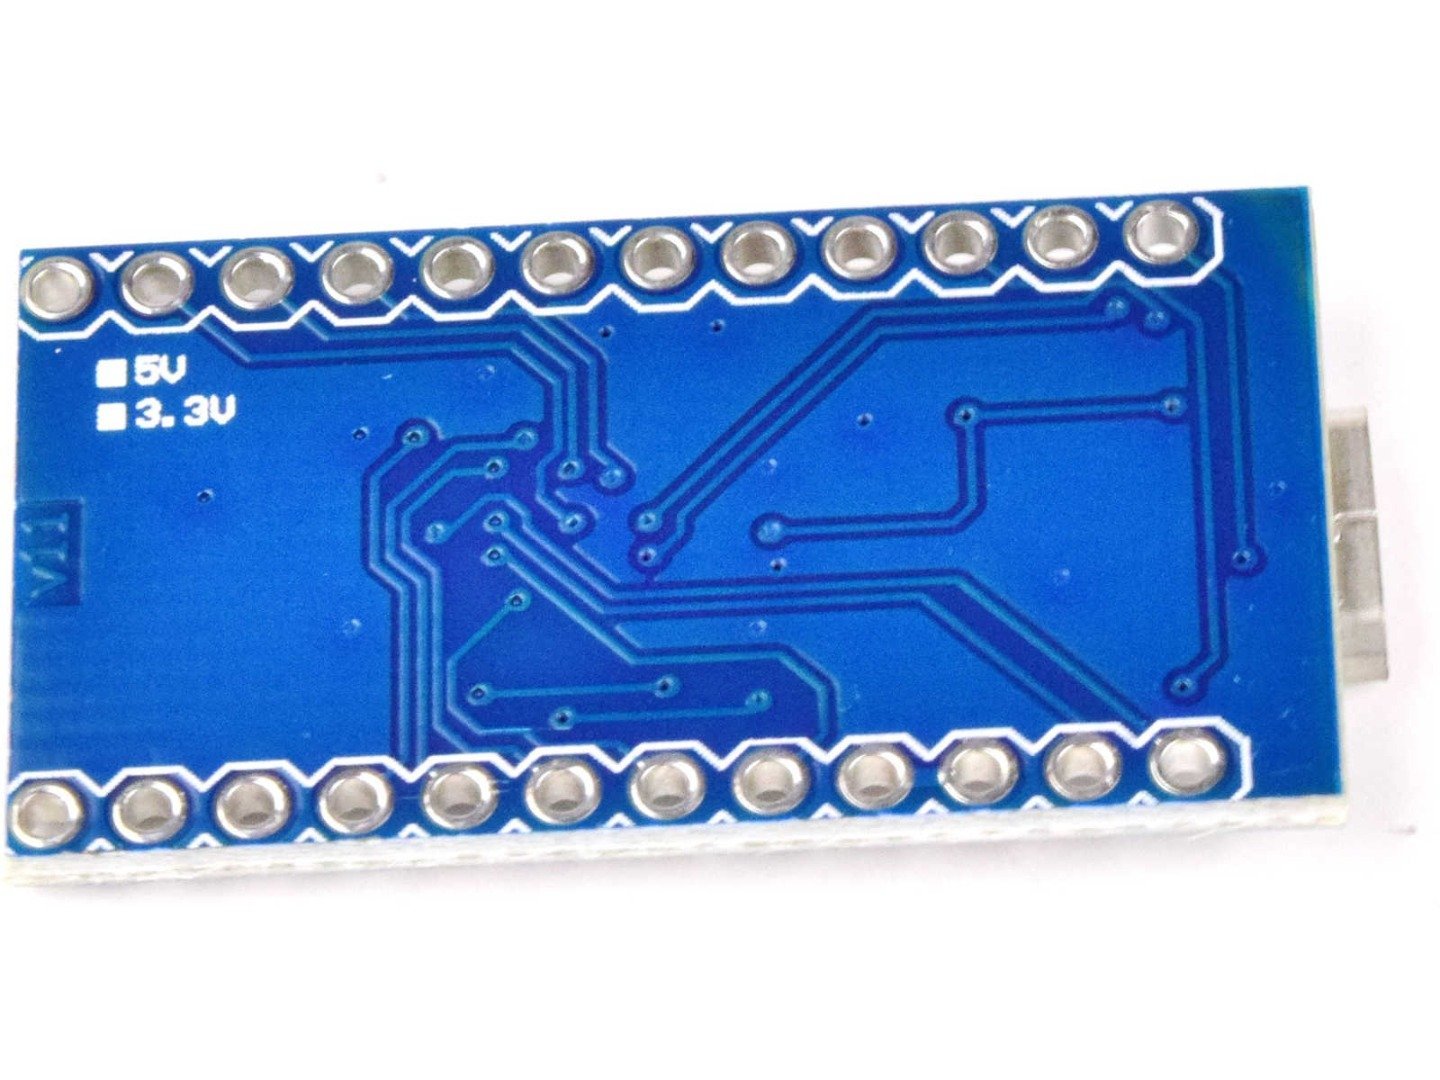 Pro Micro Atmega32u4, USB, 5V, 16MHz, 100% compatible with Arduino 9